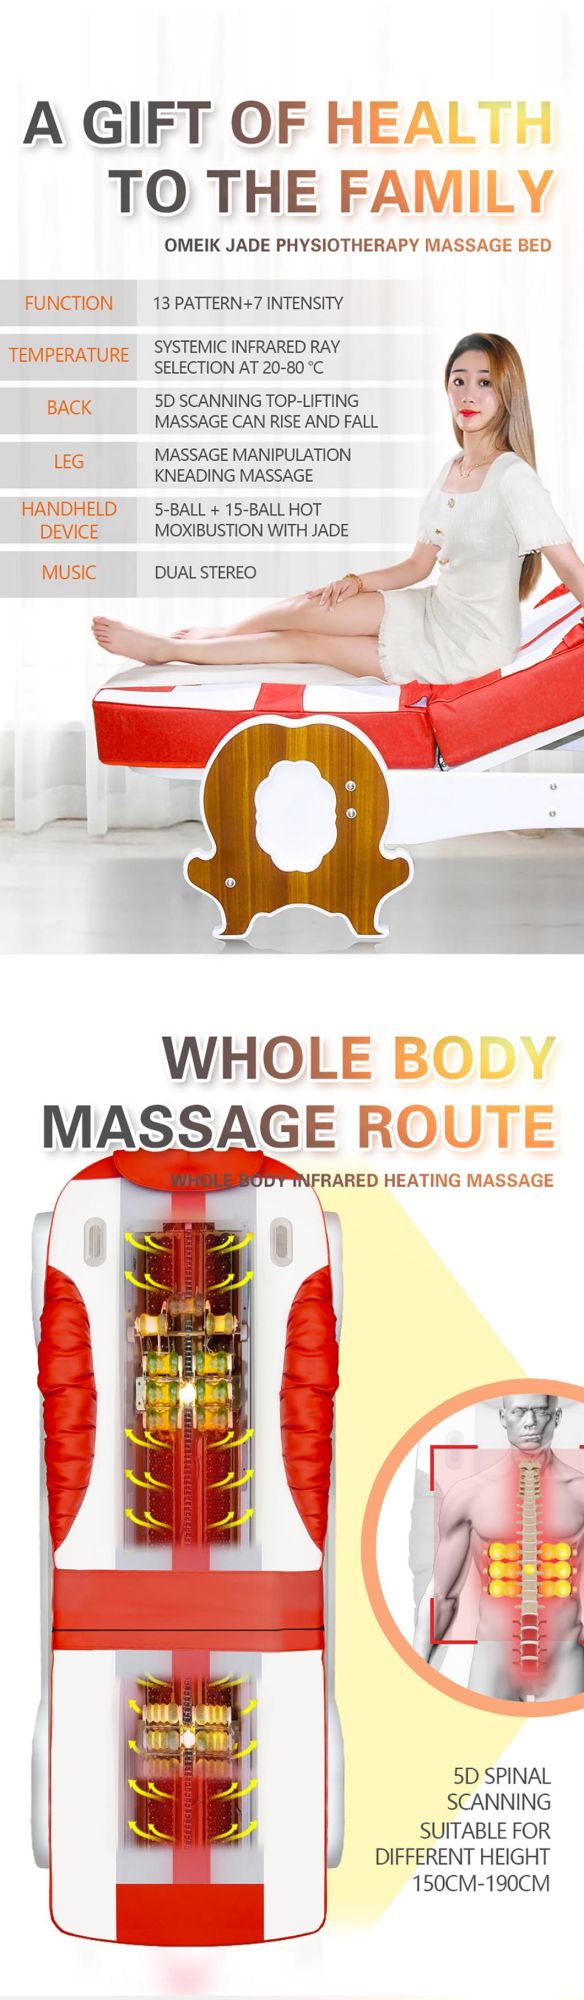 Salon SPA Music Thermal Jade Stone Full Body Relex Massage Bed